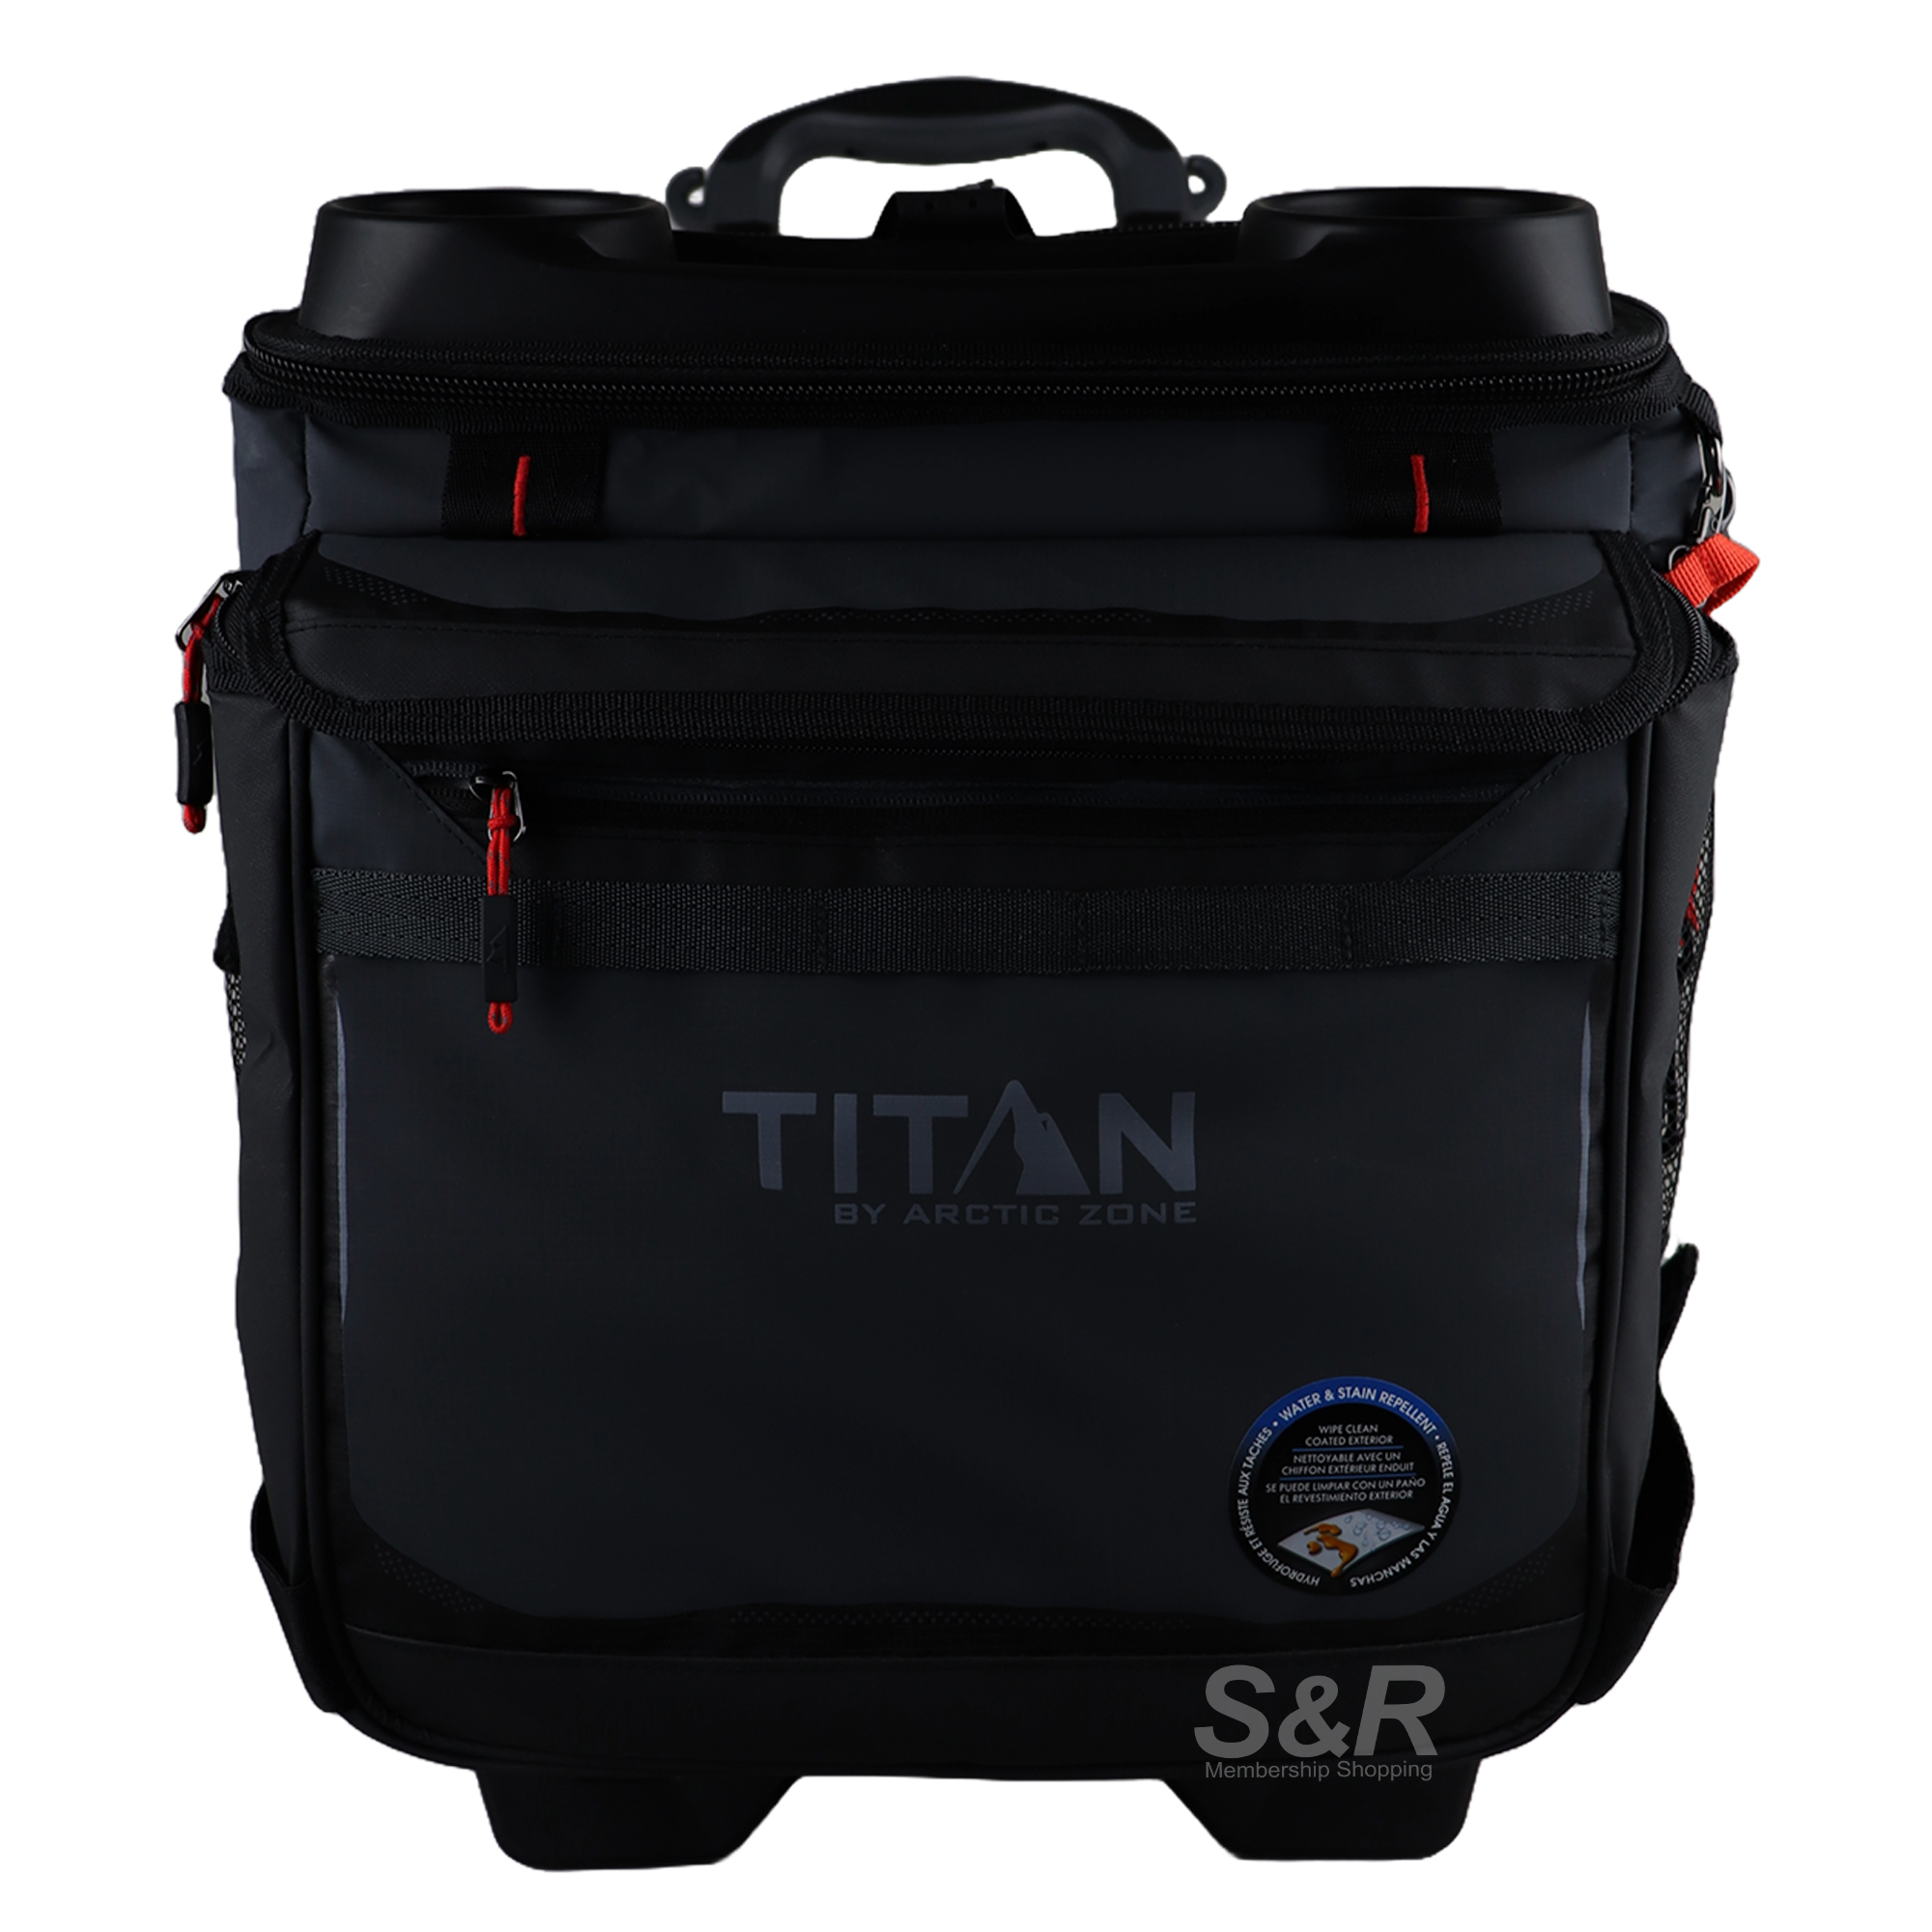 Titan Collapsible Cooler Stroller Bag